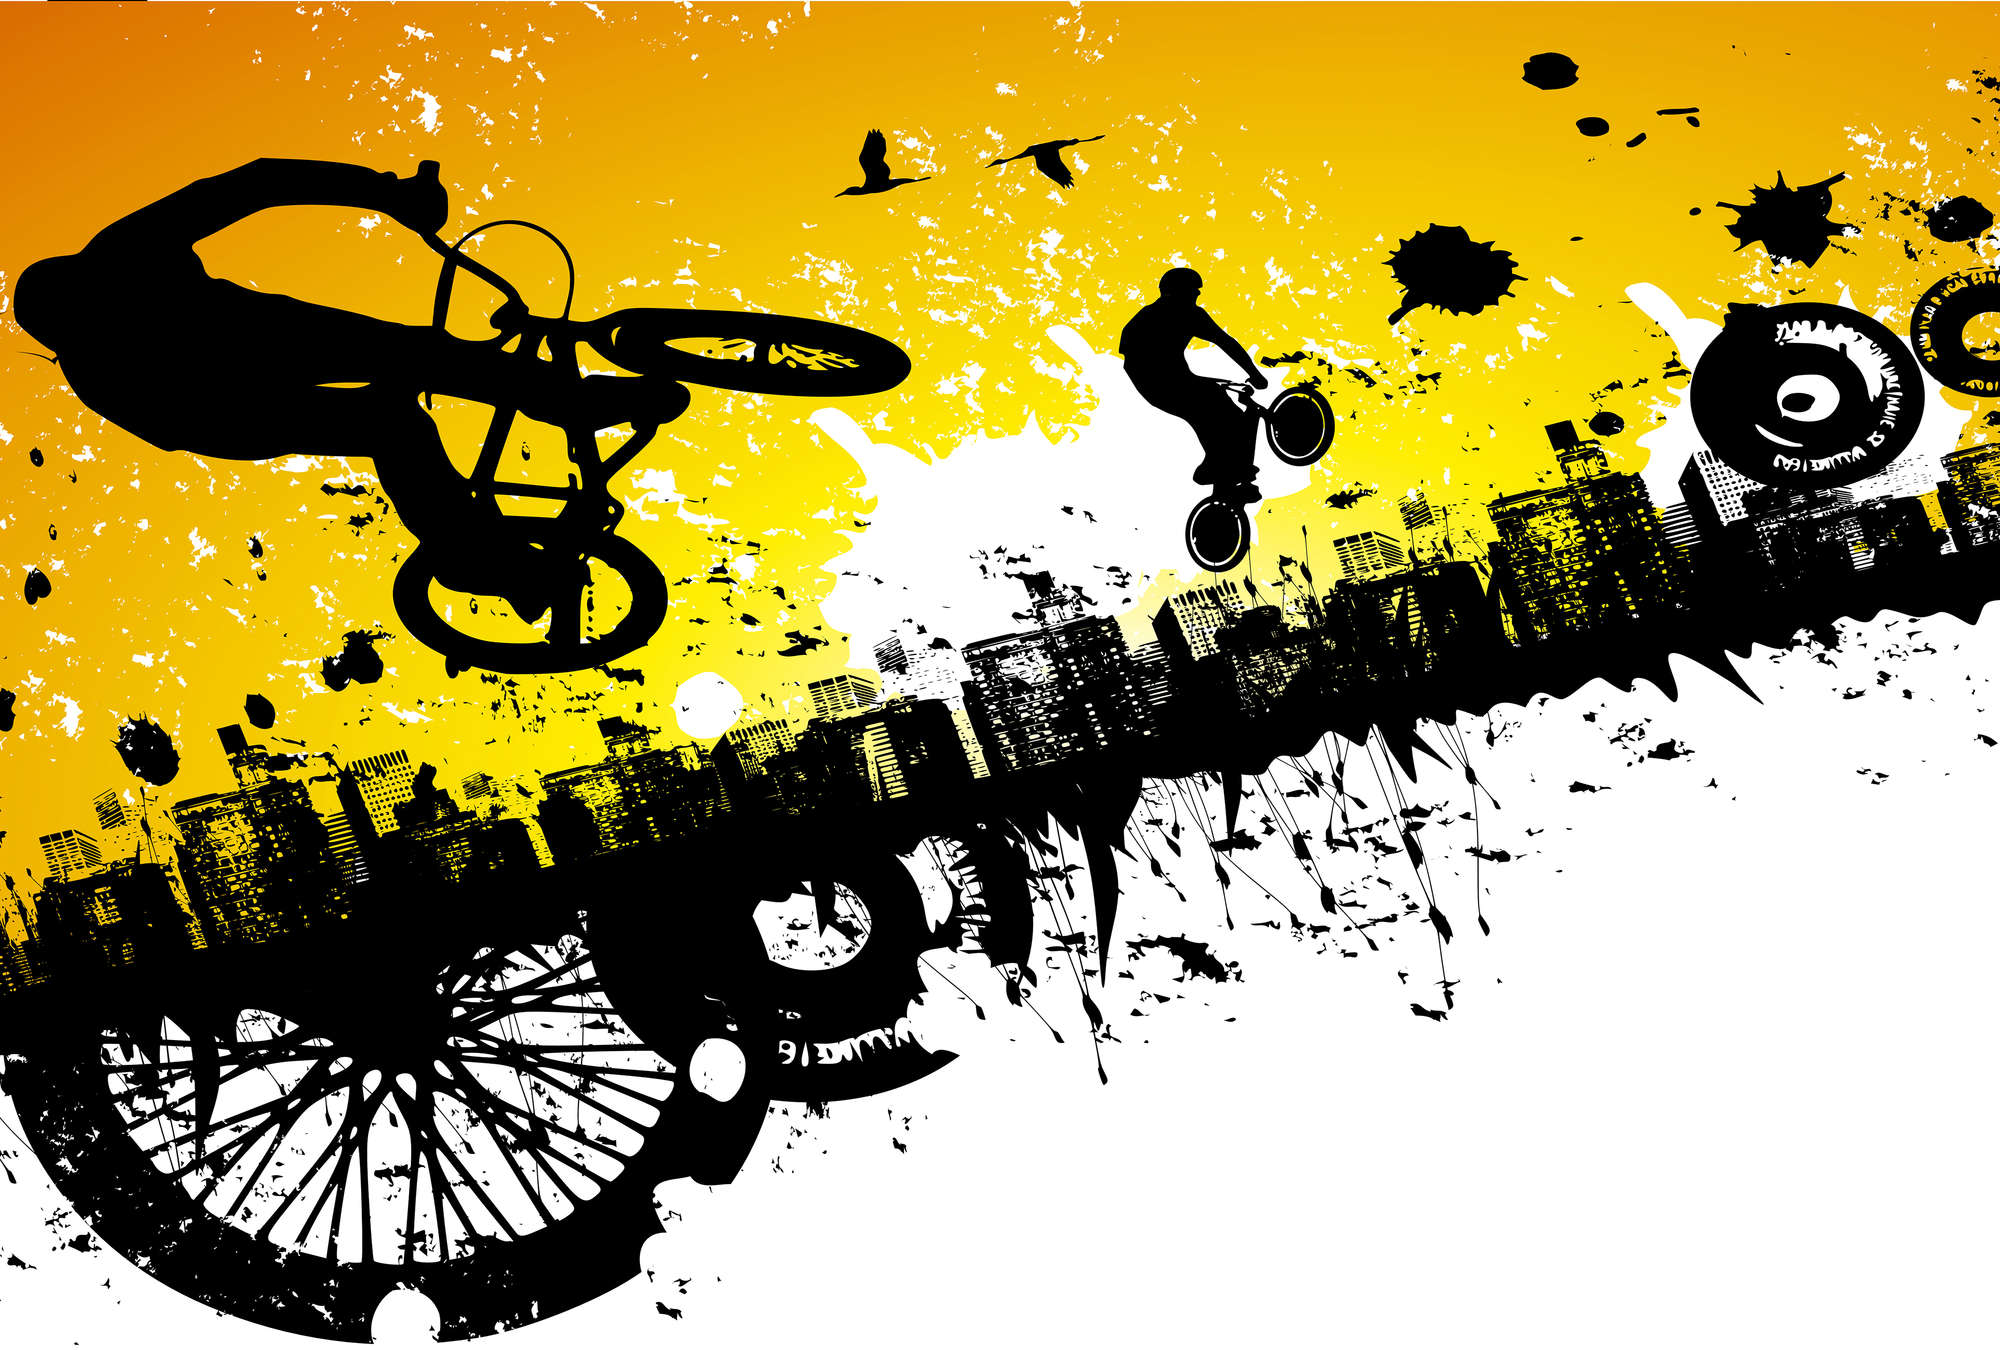             Graffiti Fototapete BMX Fahrer mit Skyline auf Strukturvlies
        